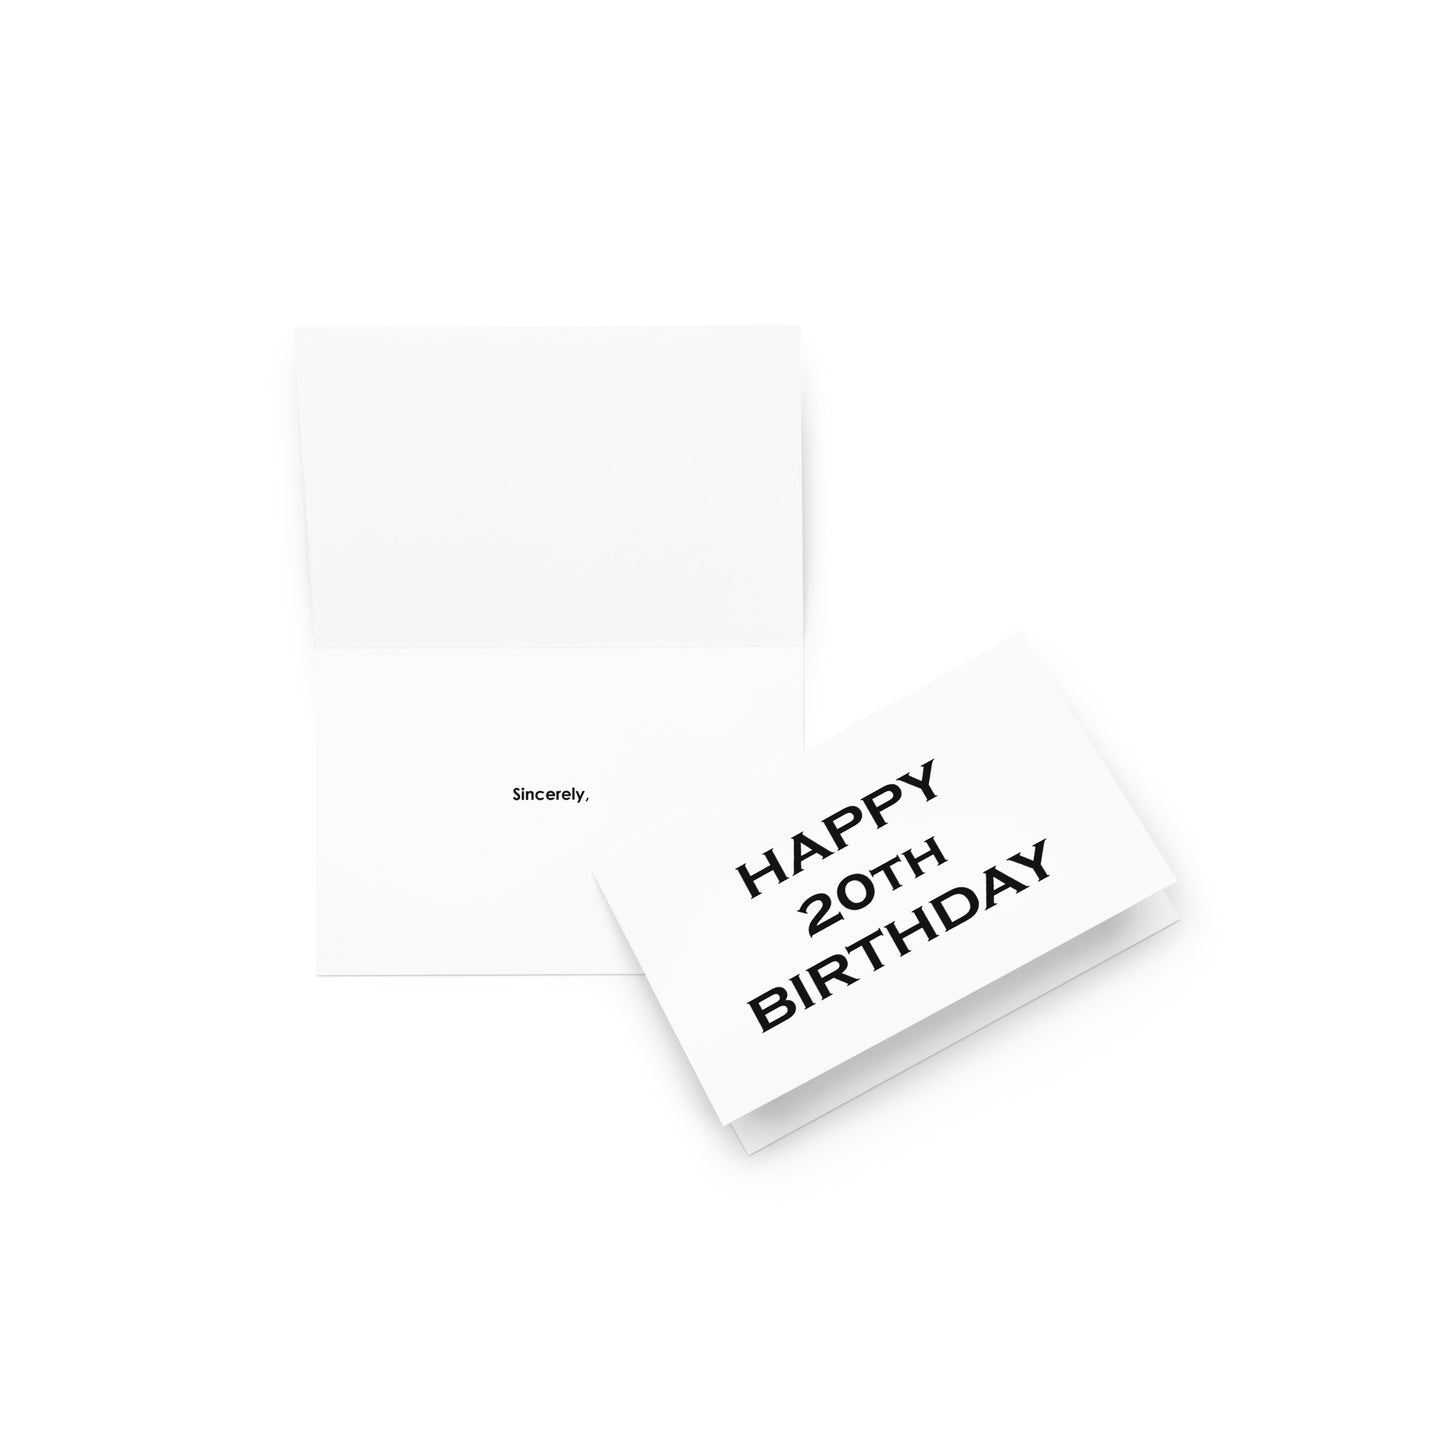 20th Birthday Card - Note - 4”x6” folded